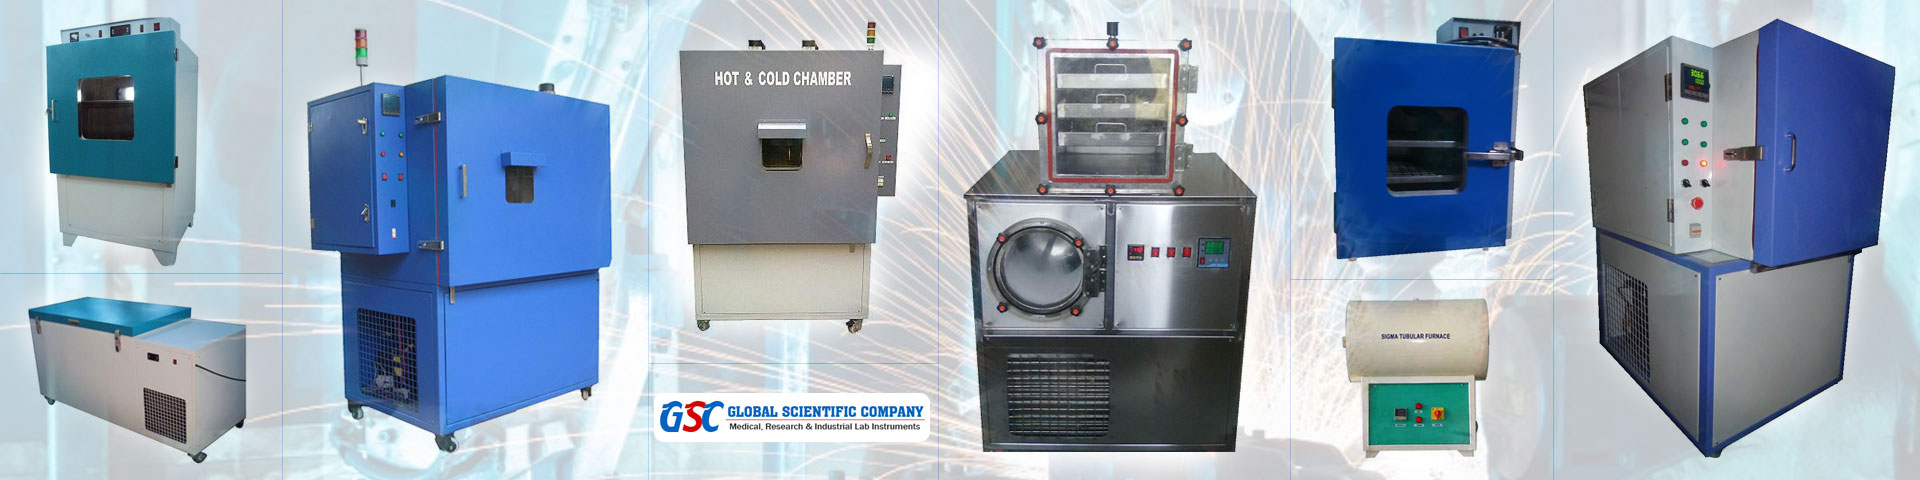 Lyophilizer / Freeze Drier - Global Scientific Company Chennai